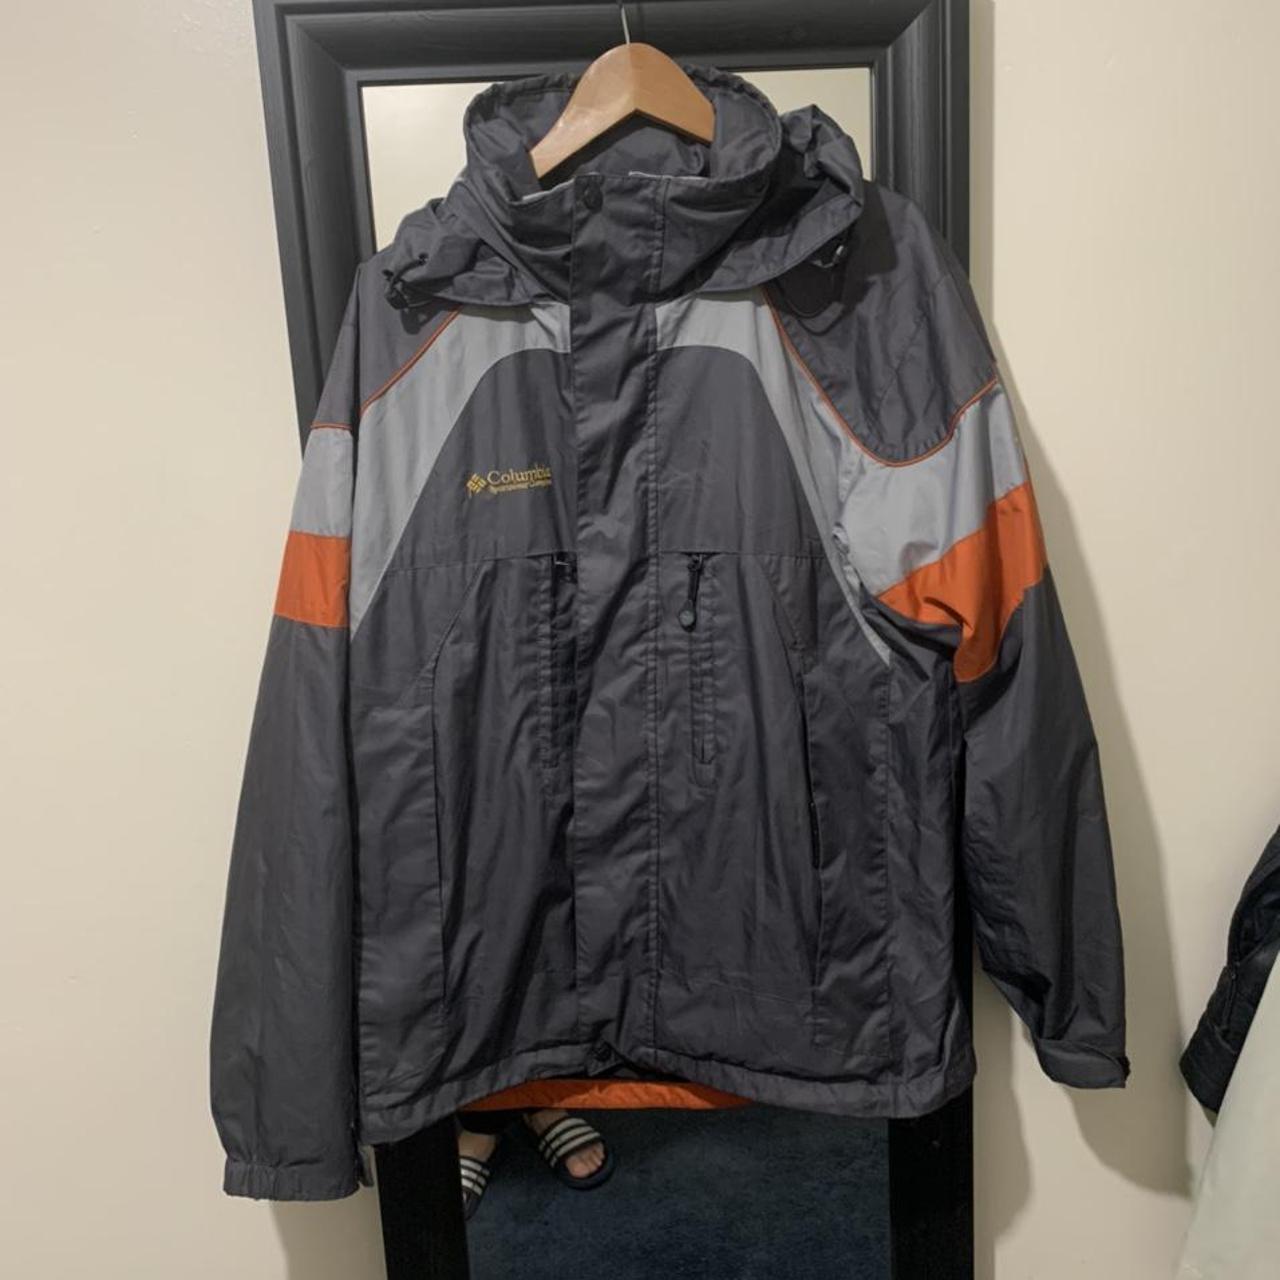 Columbia Sportswear Men's Orange and Grey Coat | Depop